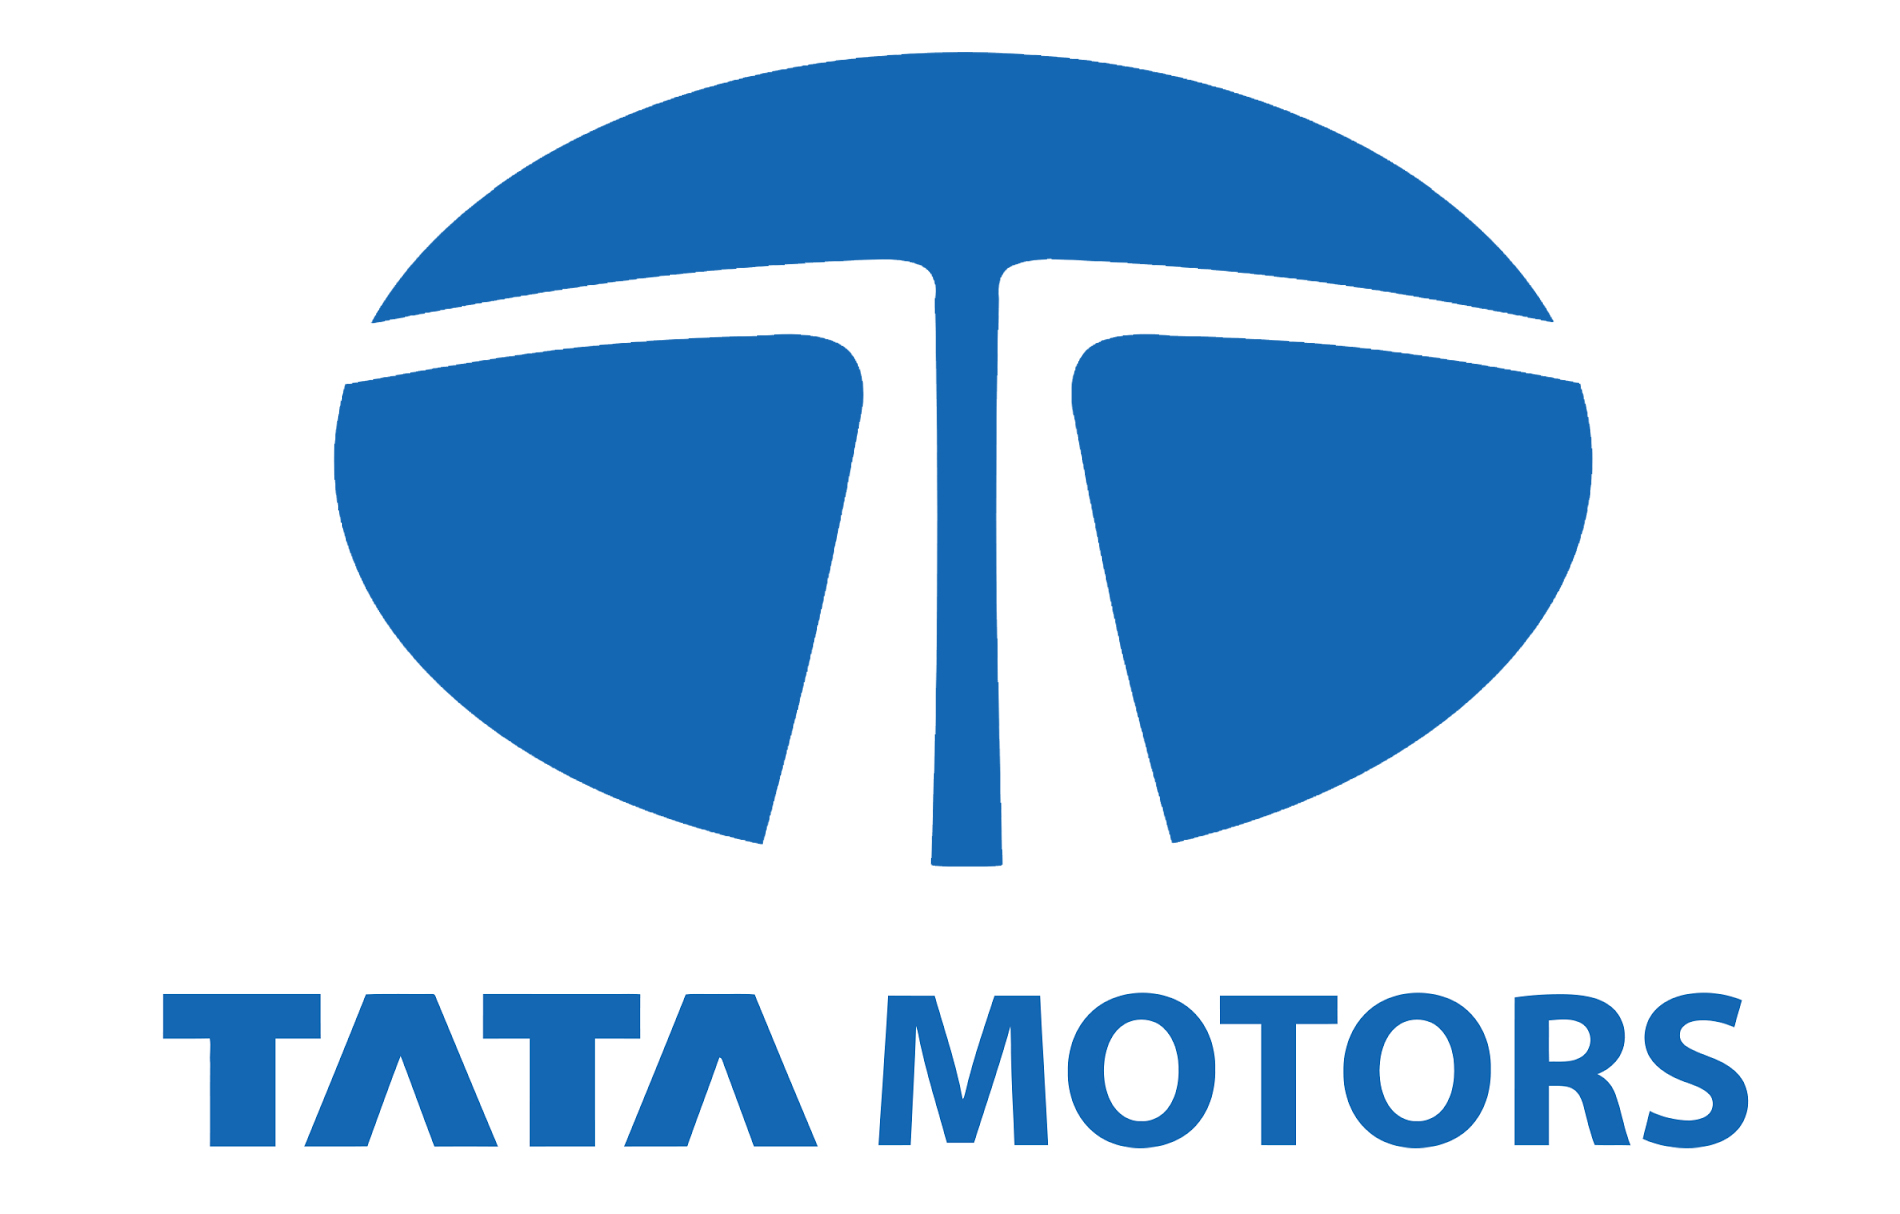 Tata Motors Cars Showroom - Seth And Sons|Show Room|Automotive